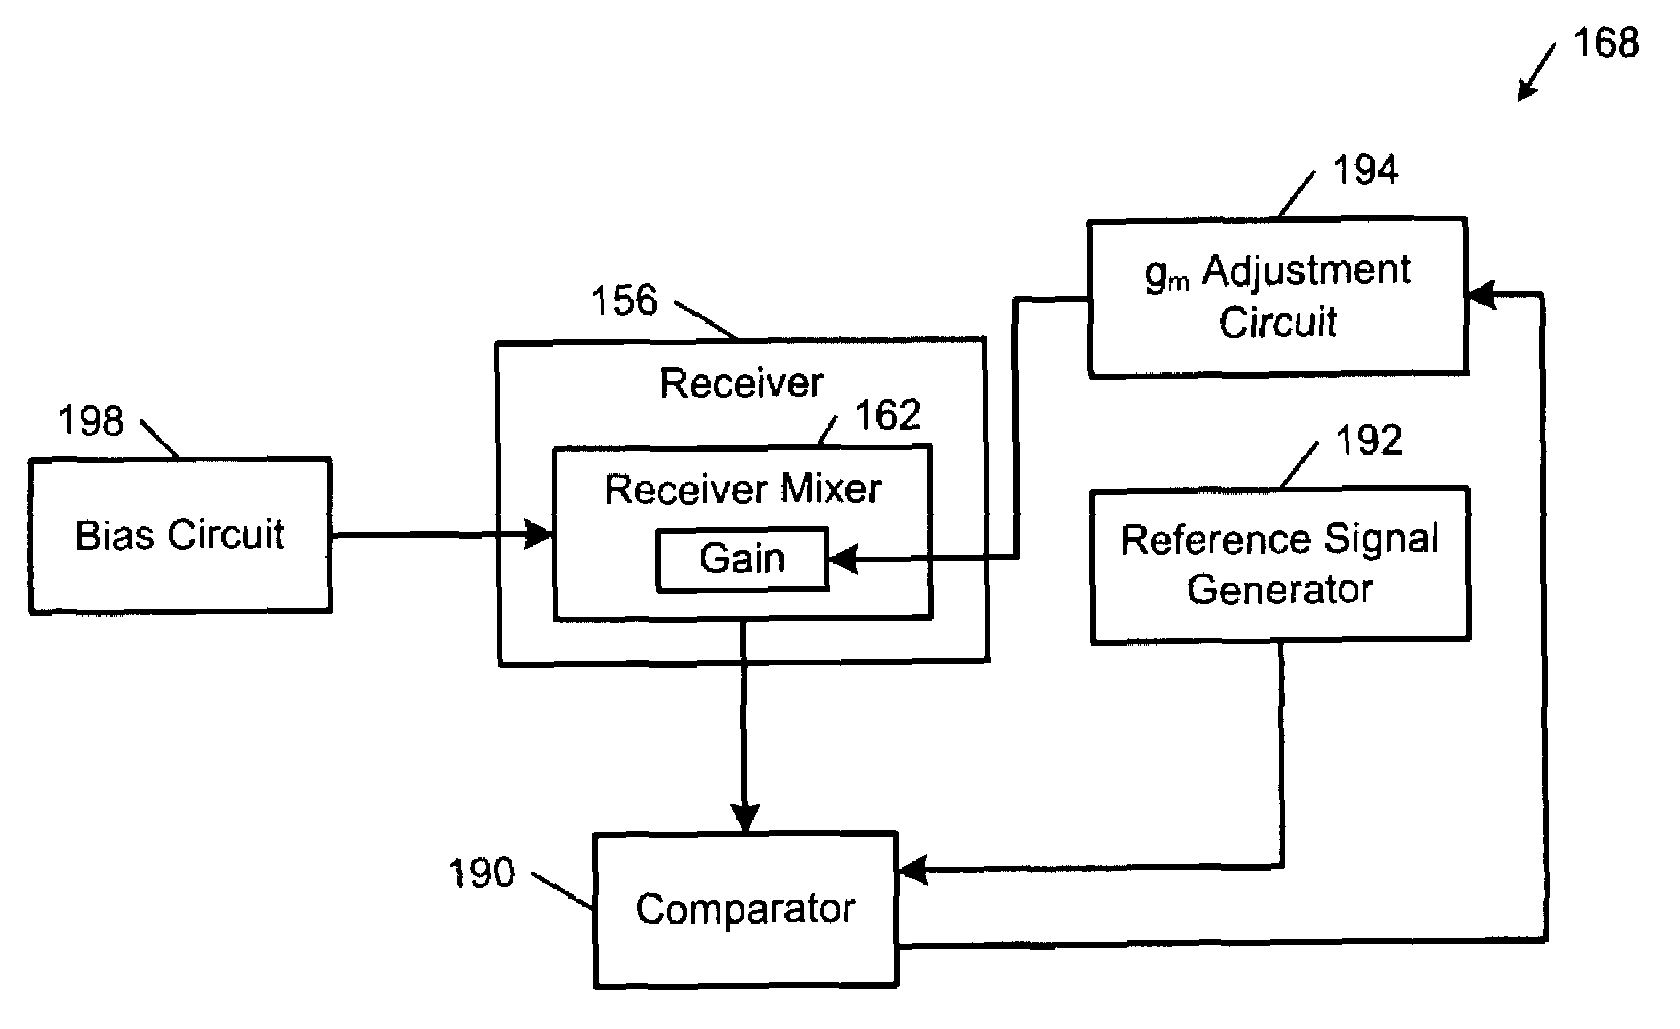 Mixer gain calibration method and apparatus